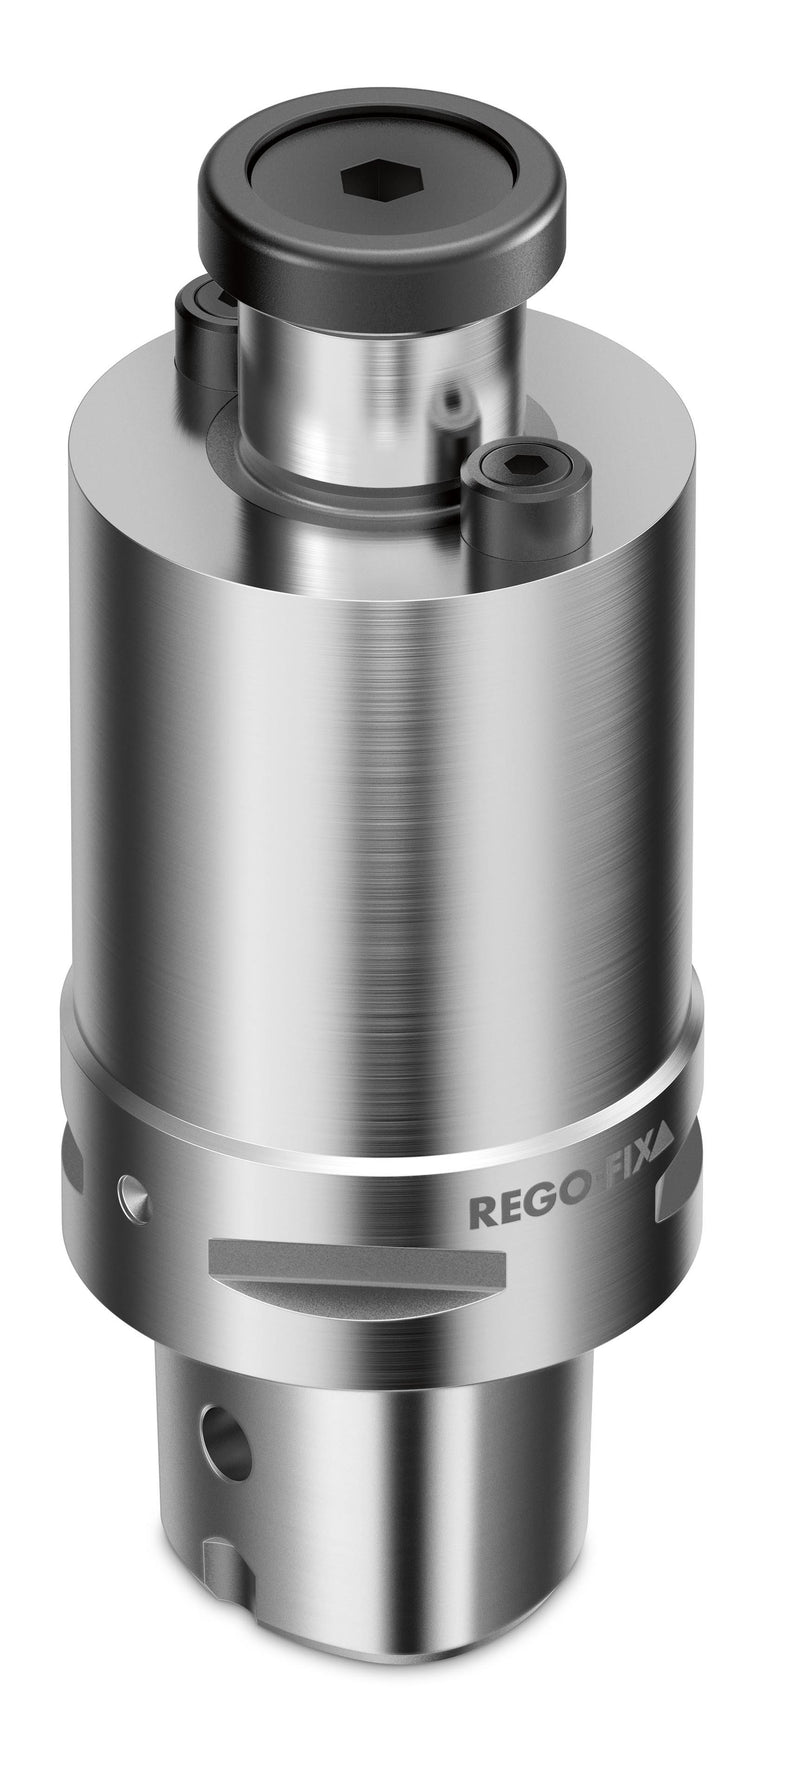 Rego-Fix C5 / MA 22 x 070 Tool Holder 2805.02240 (0648208)